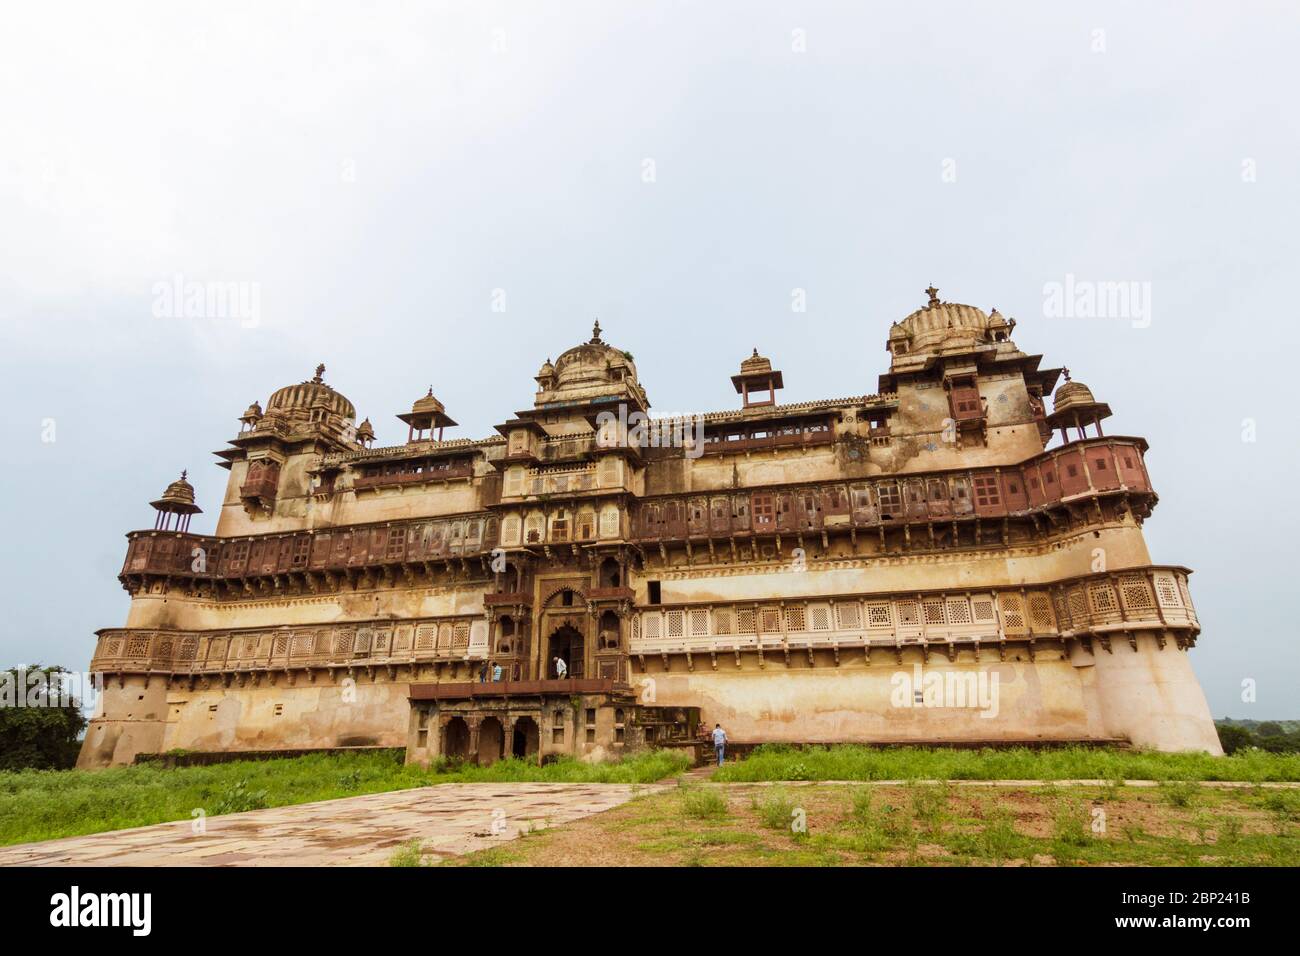 Orchha, Madhya Pradesh, Indien: Jahangir Mahal Palast des 17. Jahrhunderts innerhalb des Orchha Fort Komplexes. Stockfoto